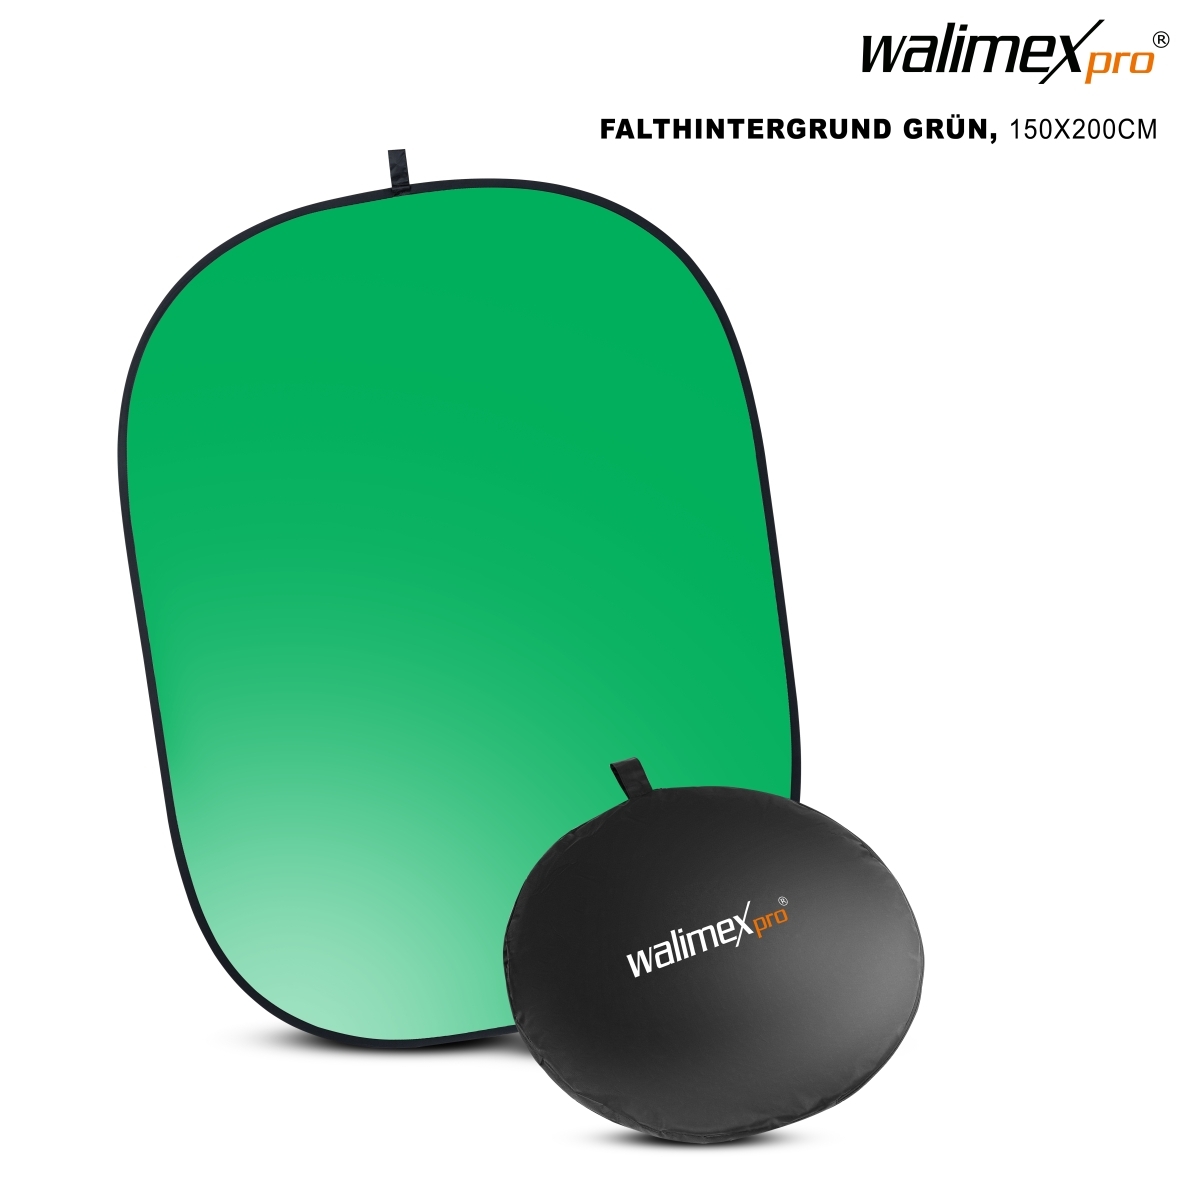 Walimex pro Falthintergrund grün 150x200cm